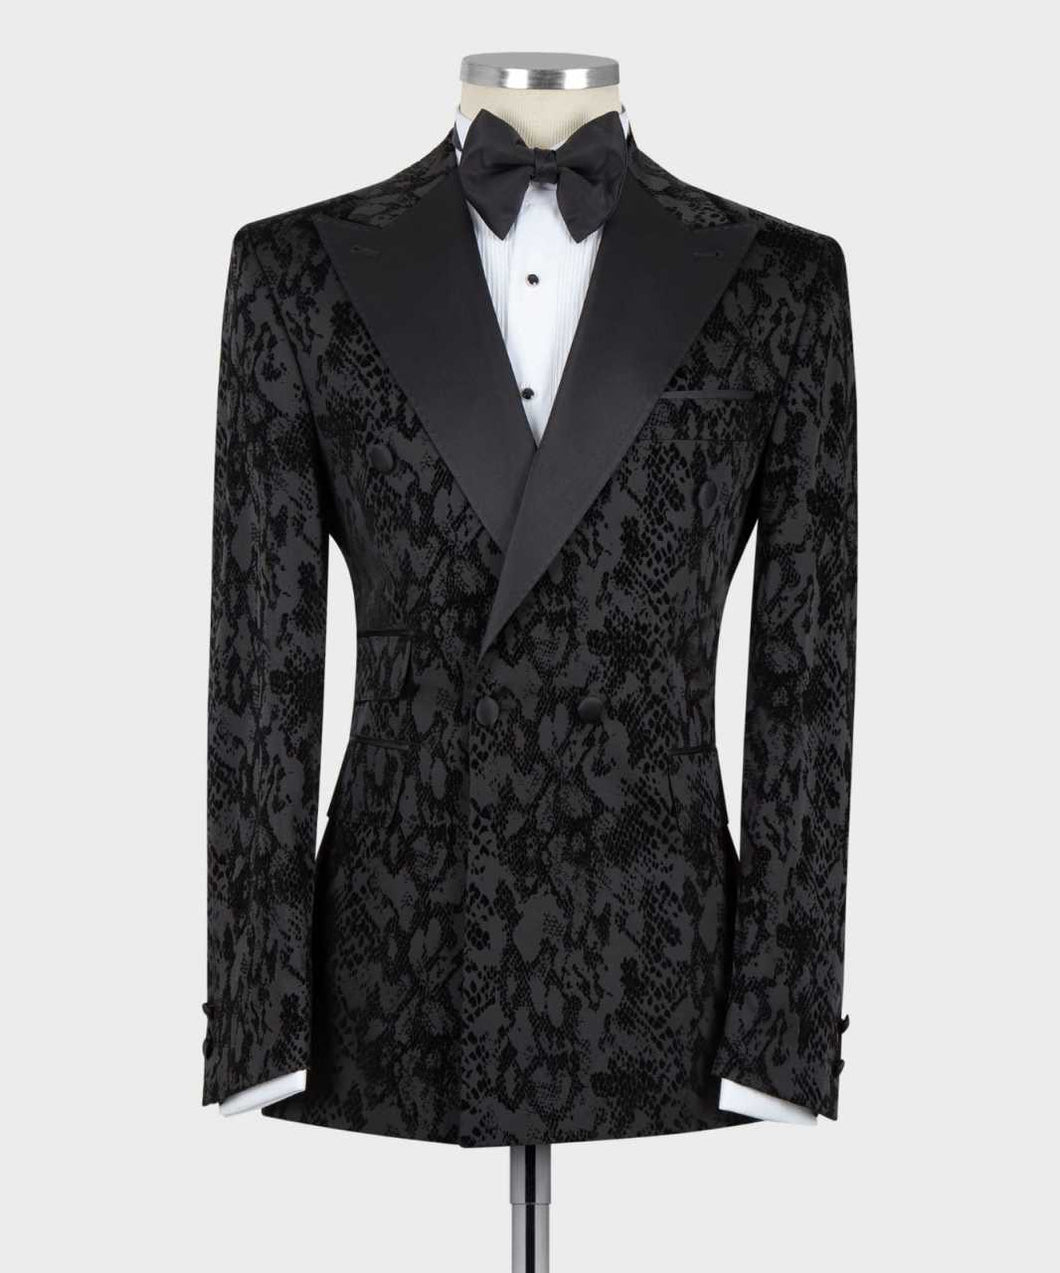 Men’s Black Tuxedo 2pc Suit